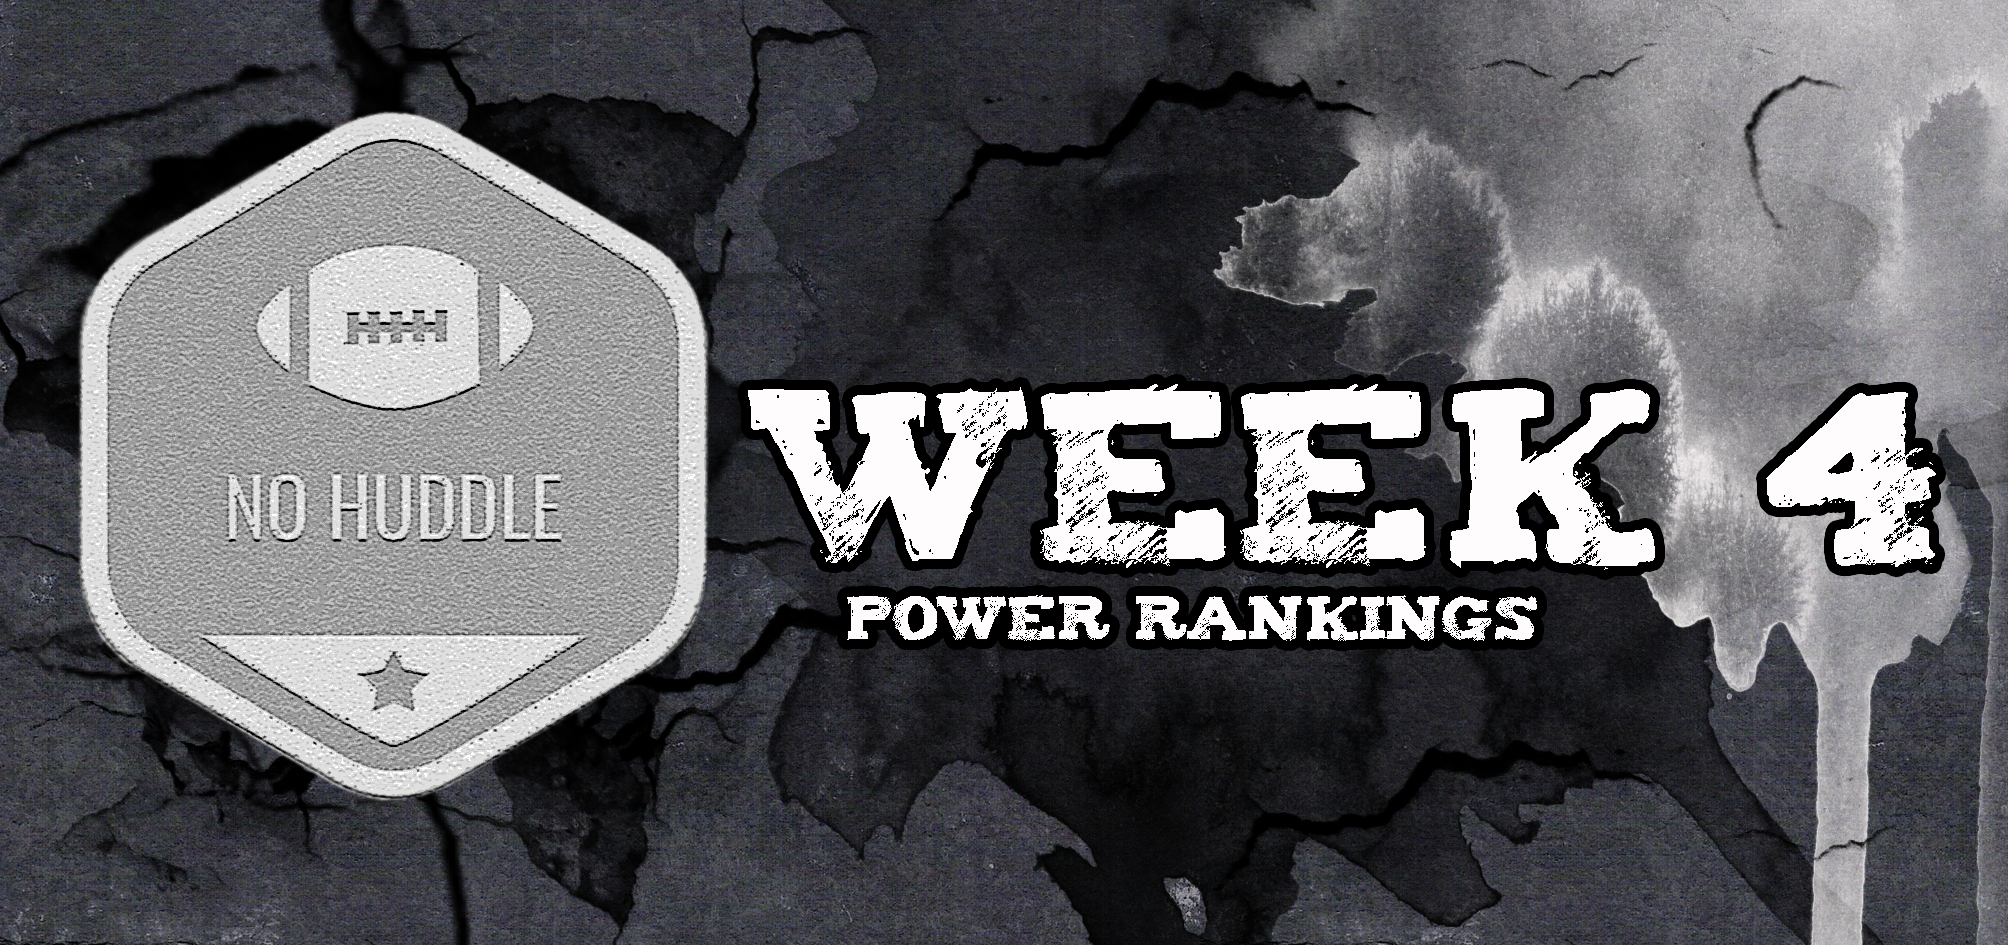 Power Rankings: Semana 4